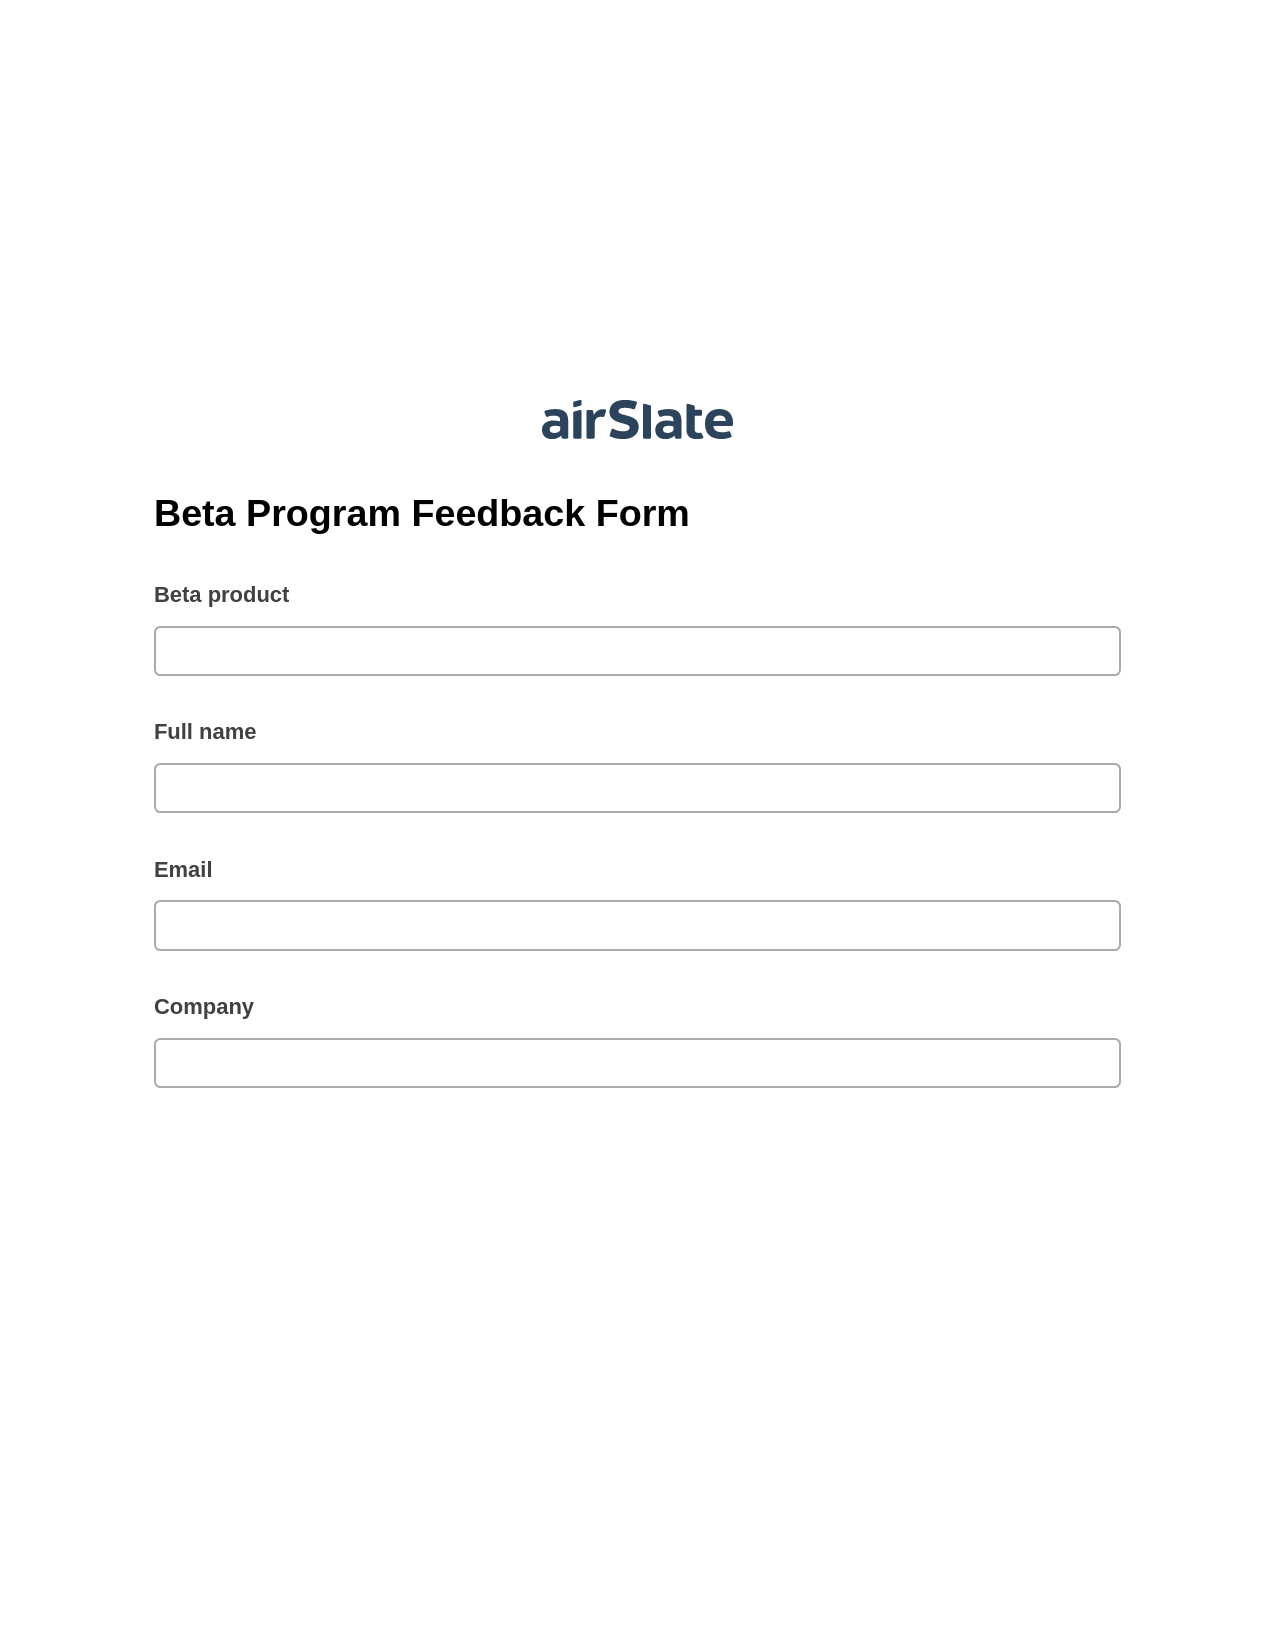 Beta Program Feedback Form Pre-fill from another Slate Bot, Webhook Bot, Box Bot